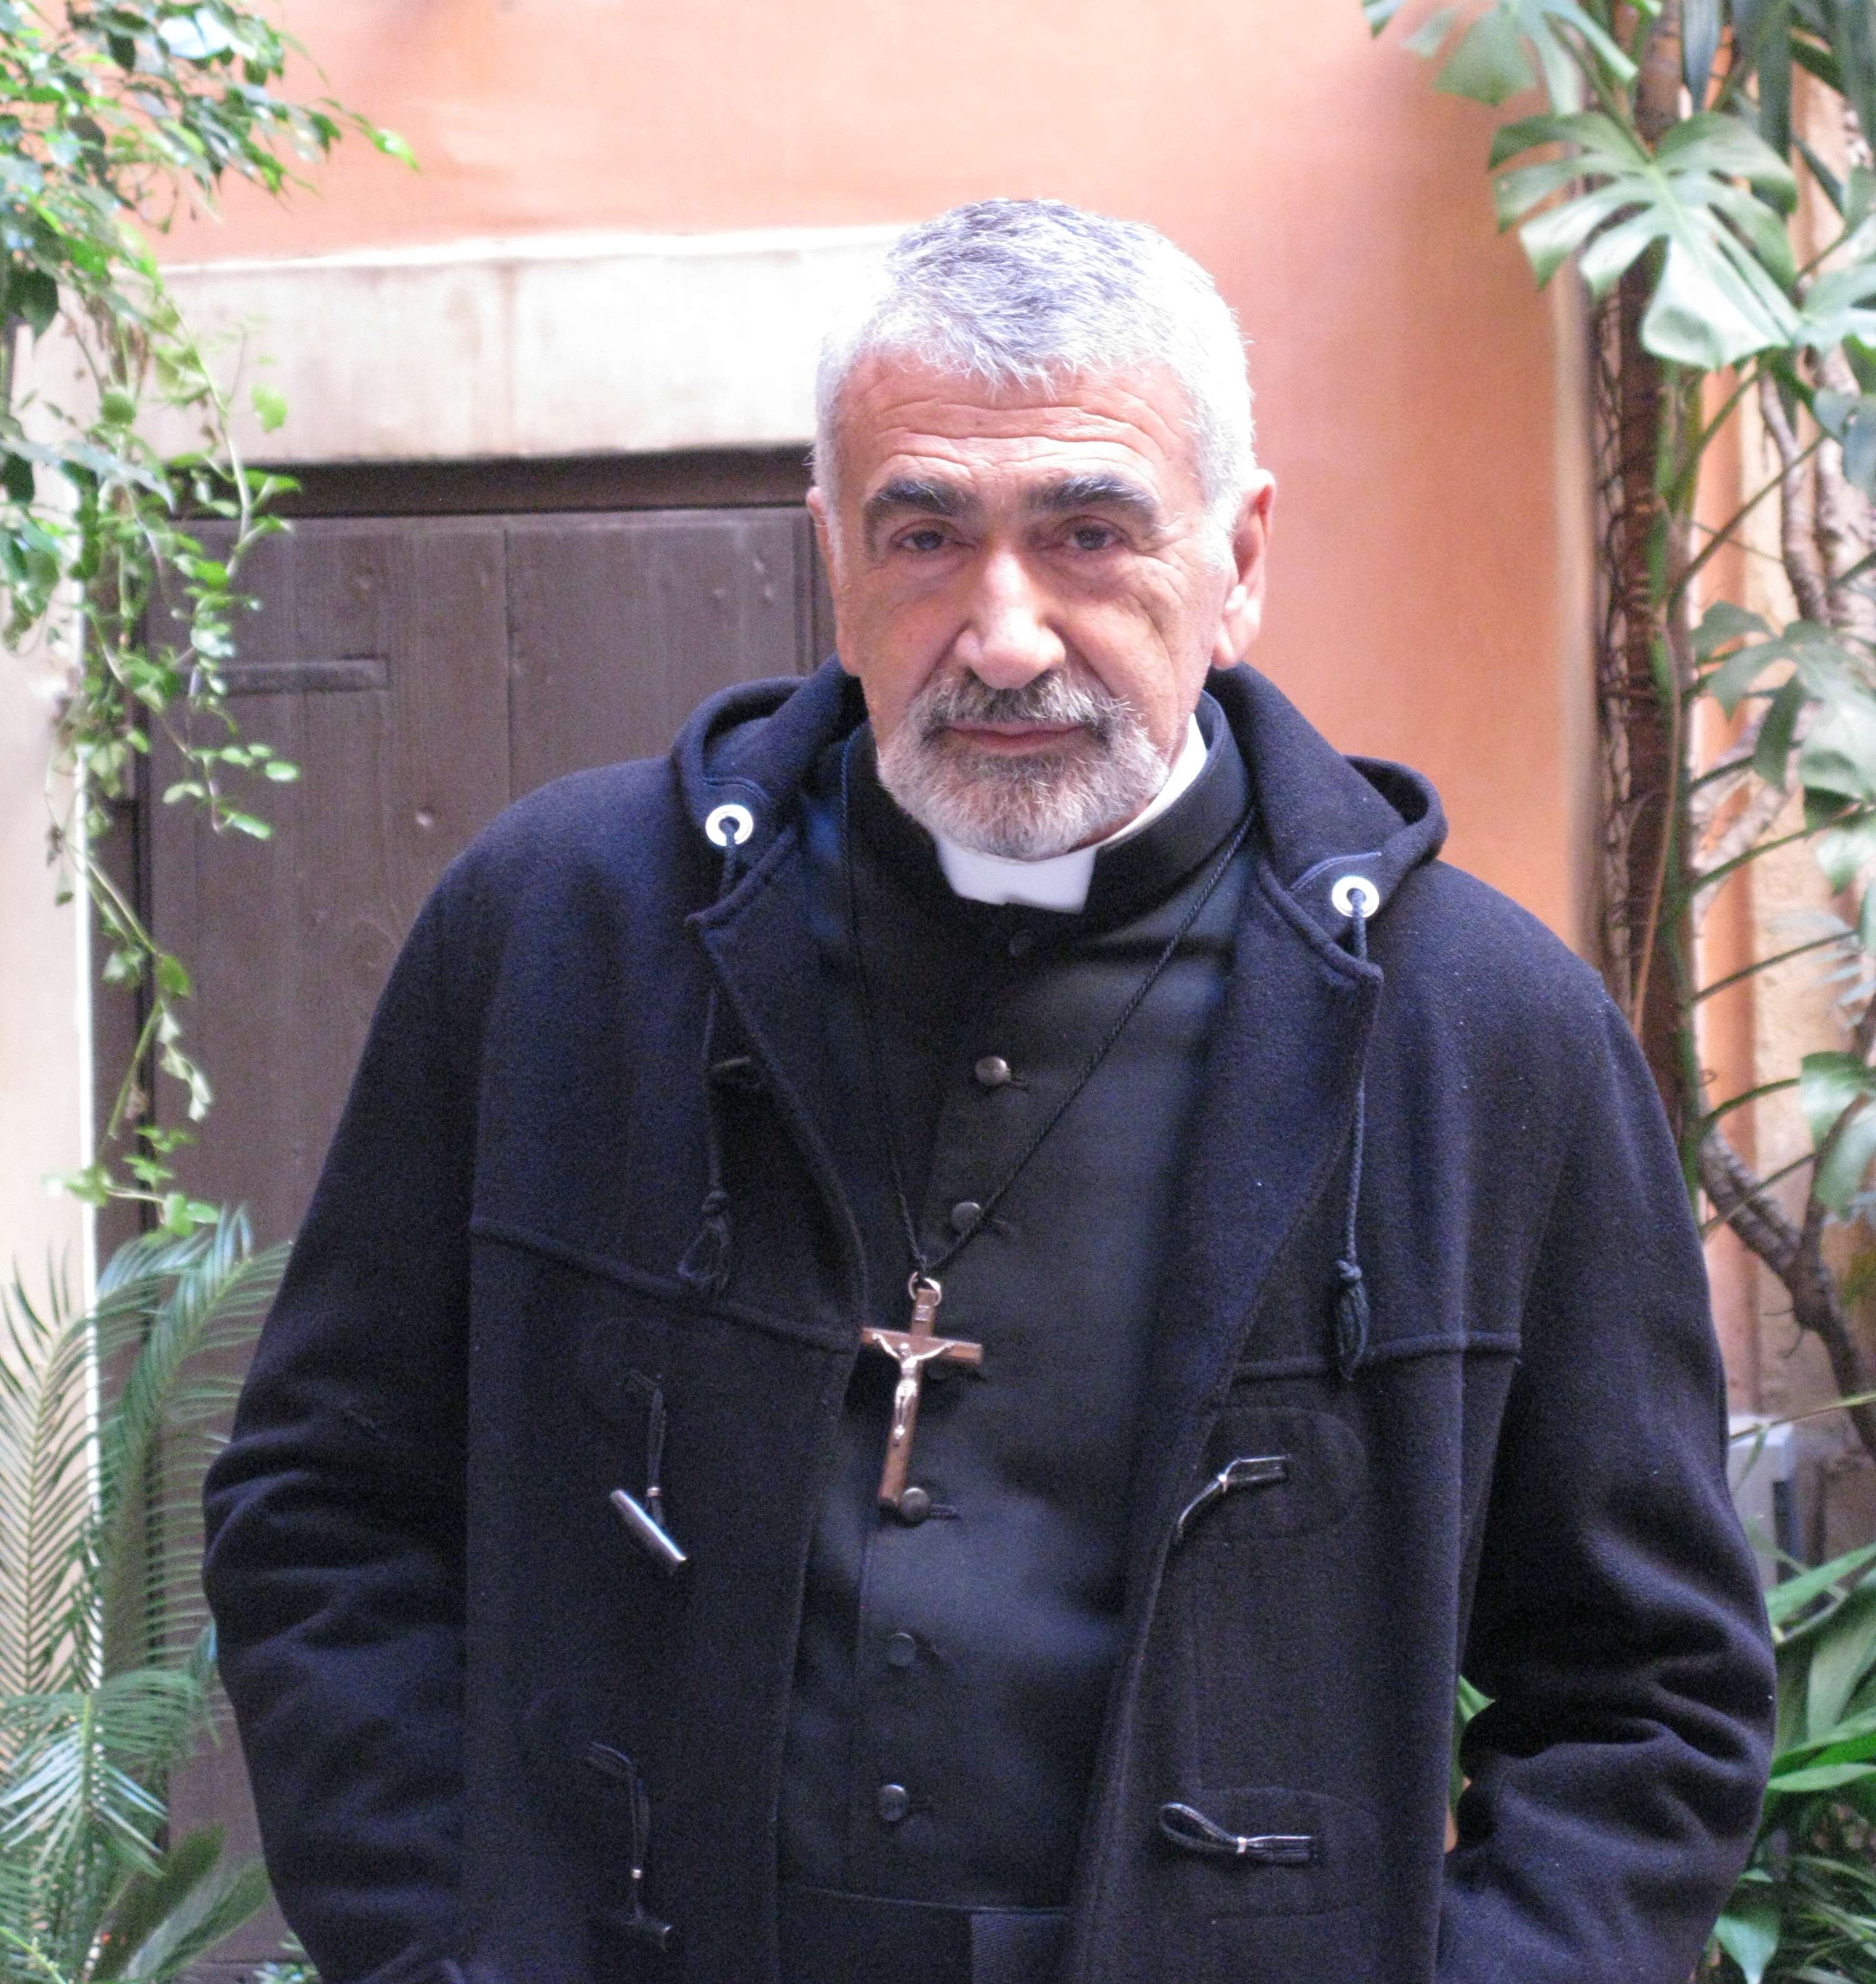 Il Tredicesimo Apostolo 2 2014 TV Series Cannale 5 Padre Alonso